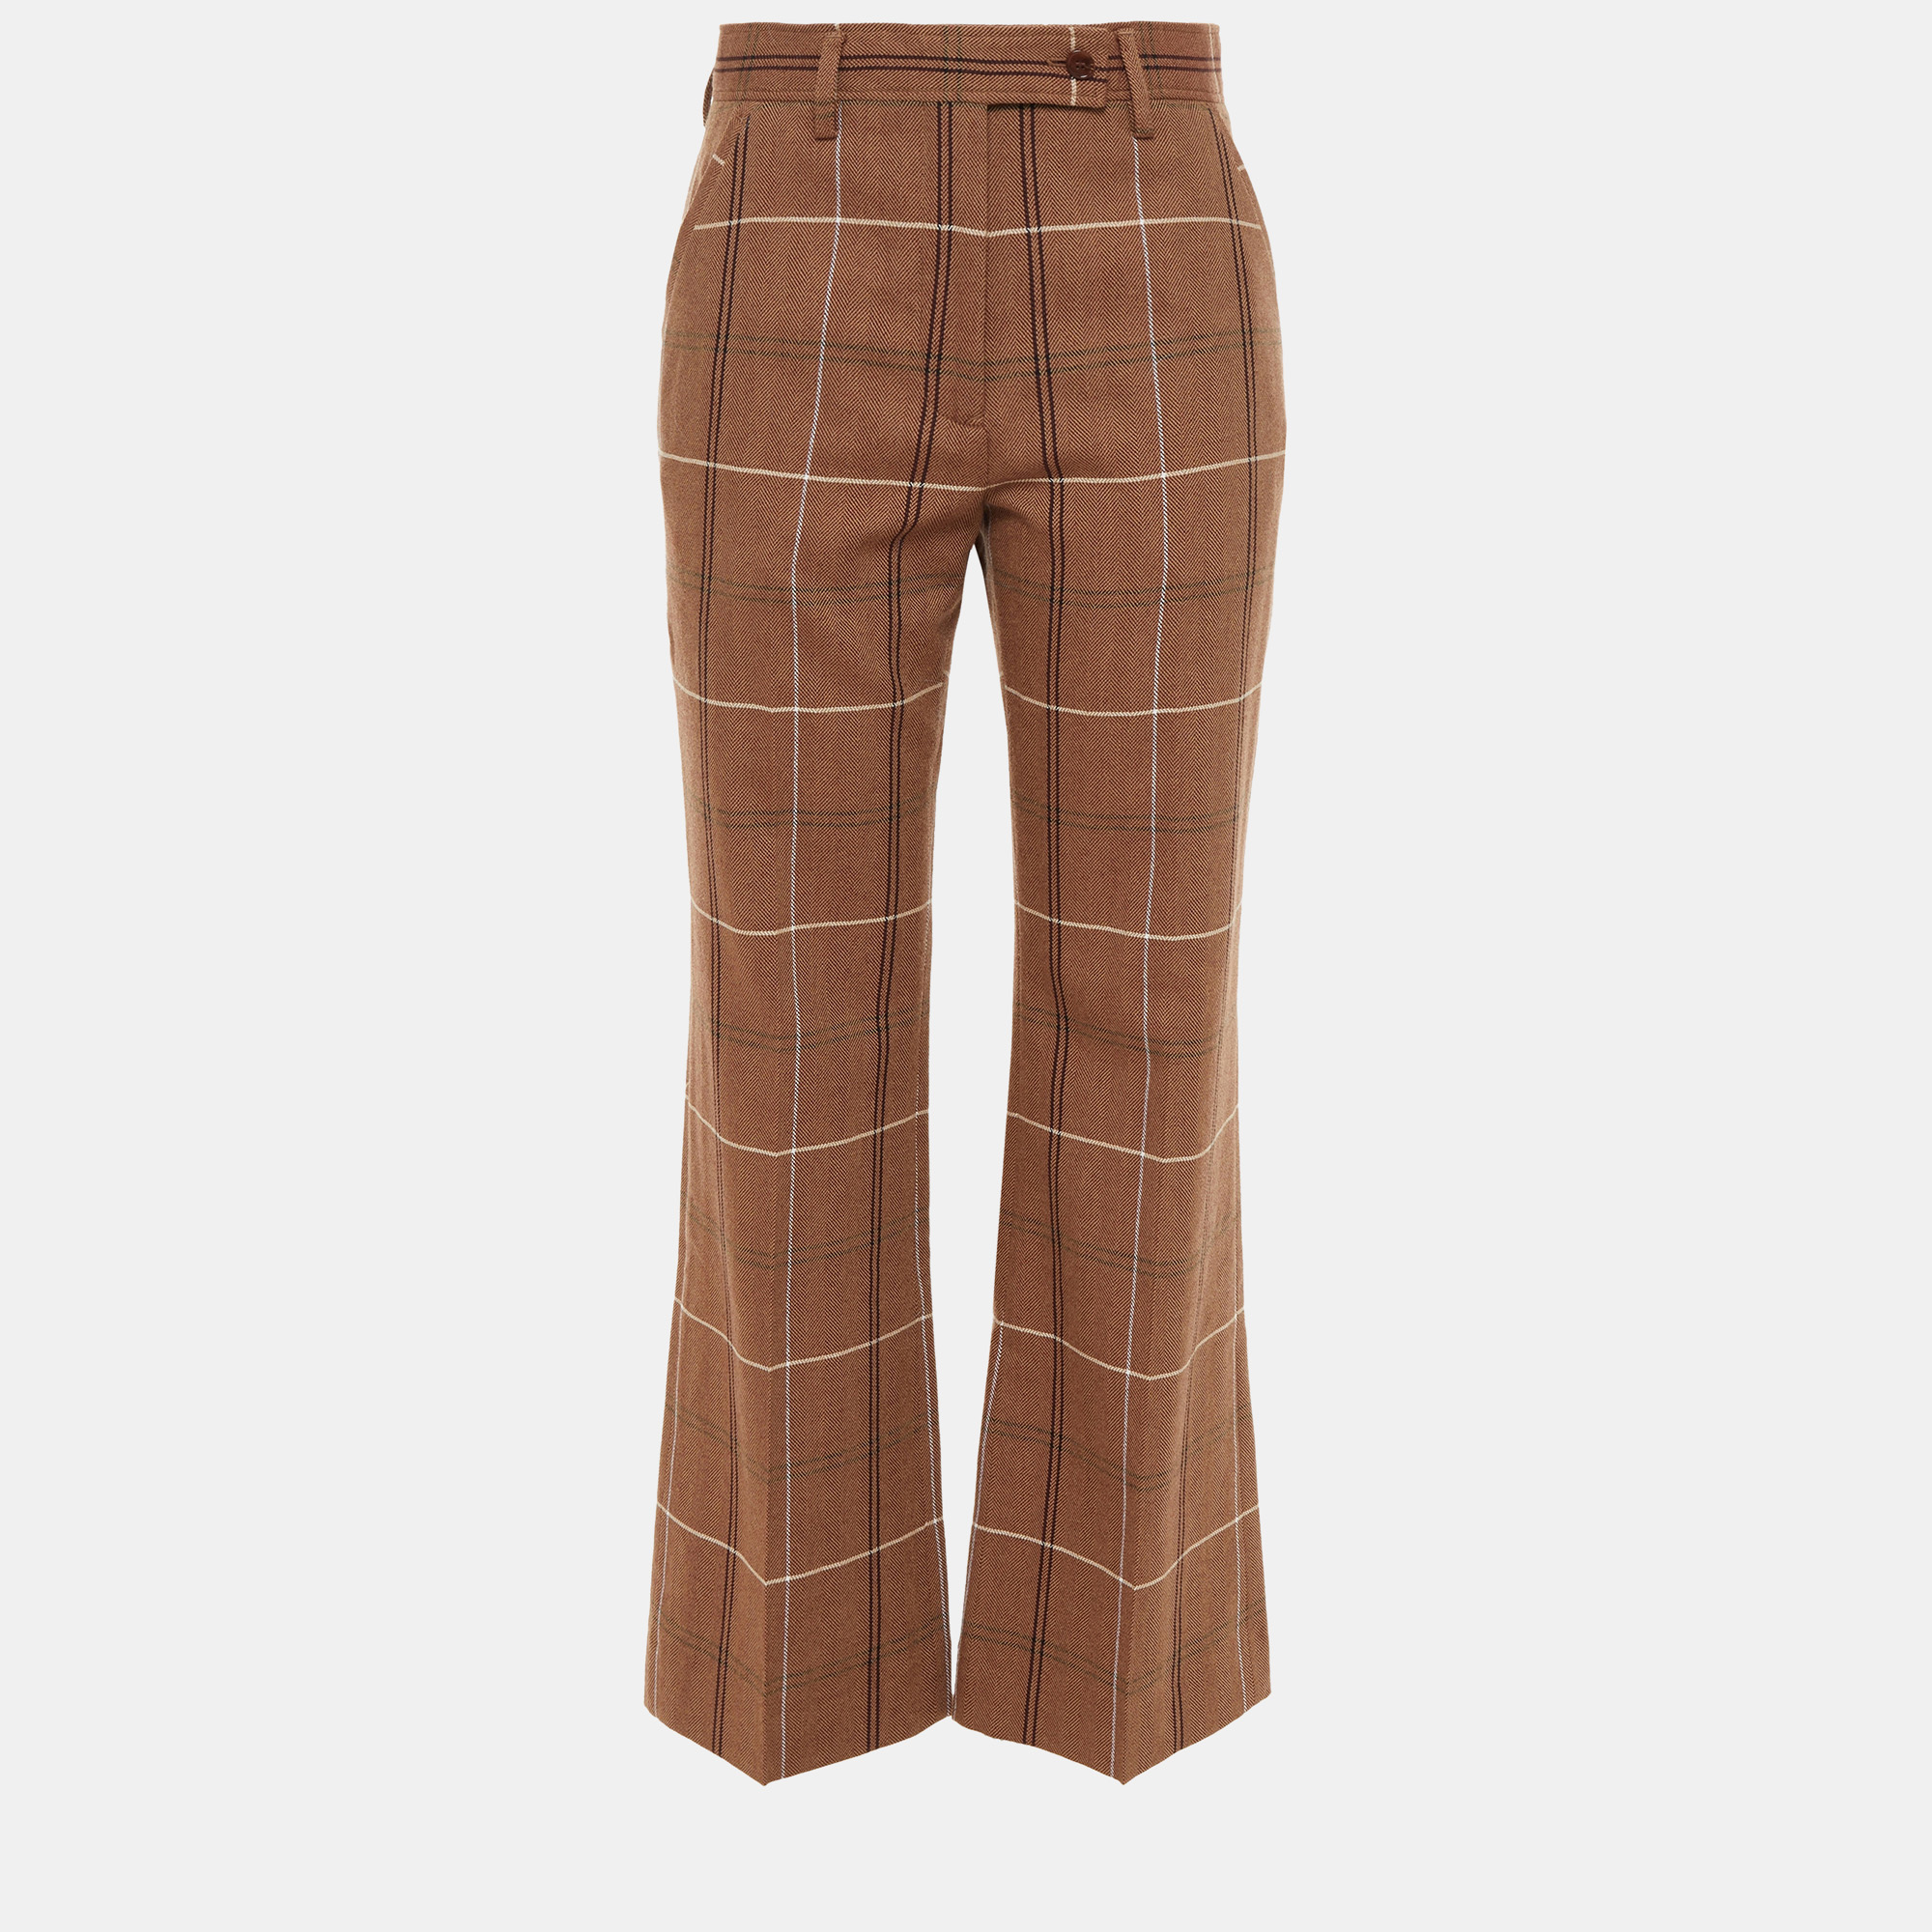 Acne studios brown checked wool straight leg pants xs (eu 34)